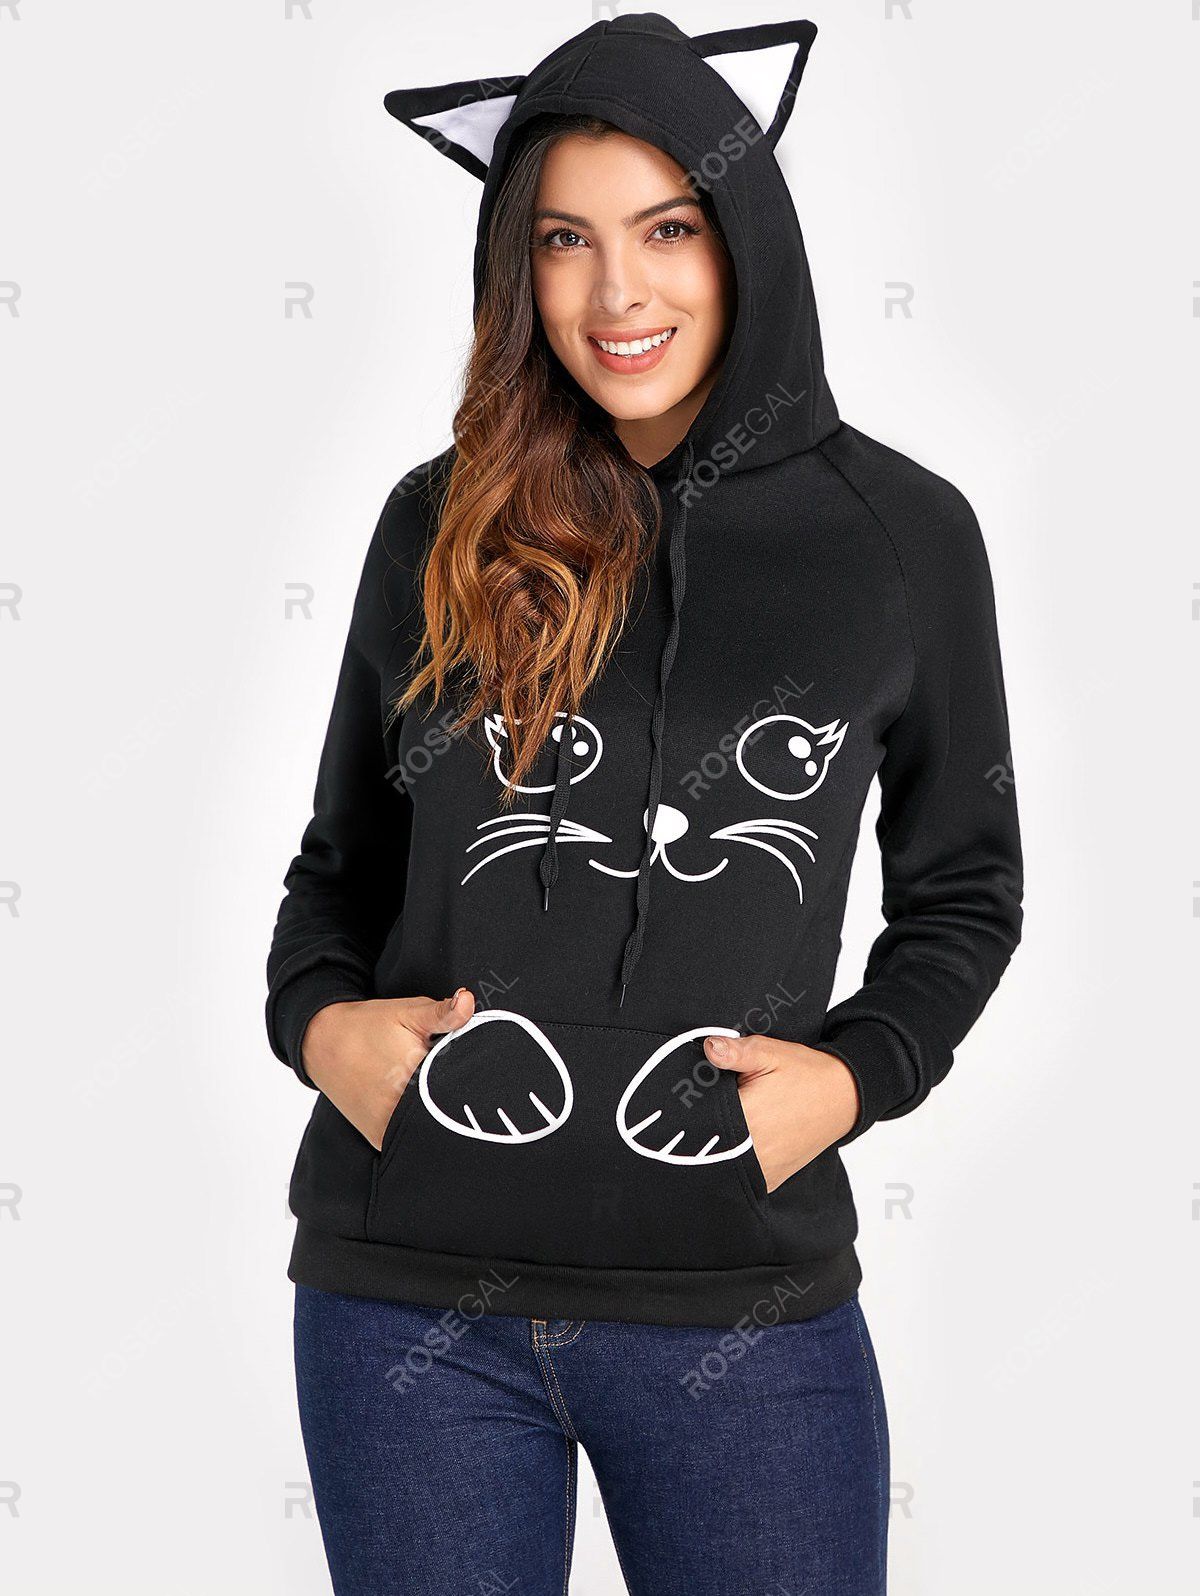 https://www.rosegal.com/sweatshirts-hoodies/cat-ear-hoodie-with-fleece-lining-2403400.html?lkid=16127505